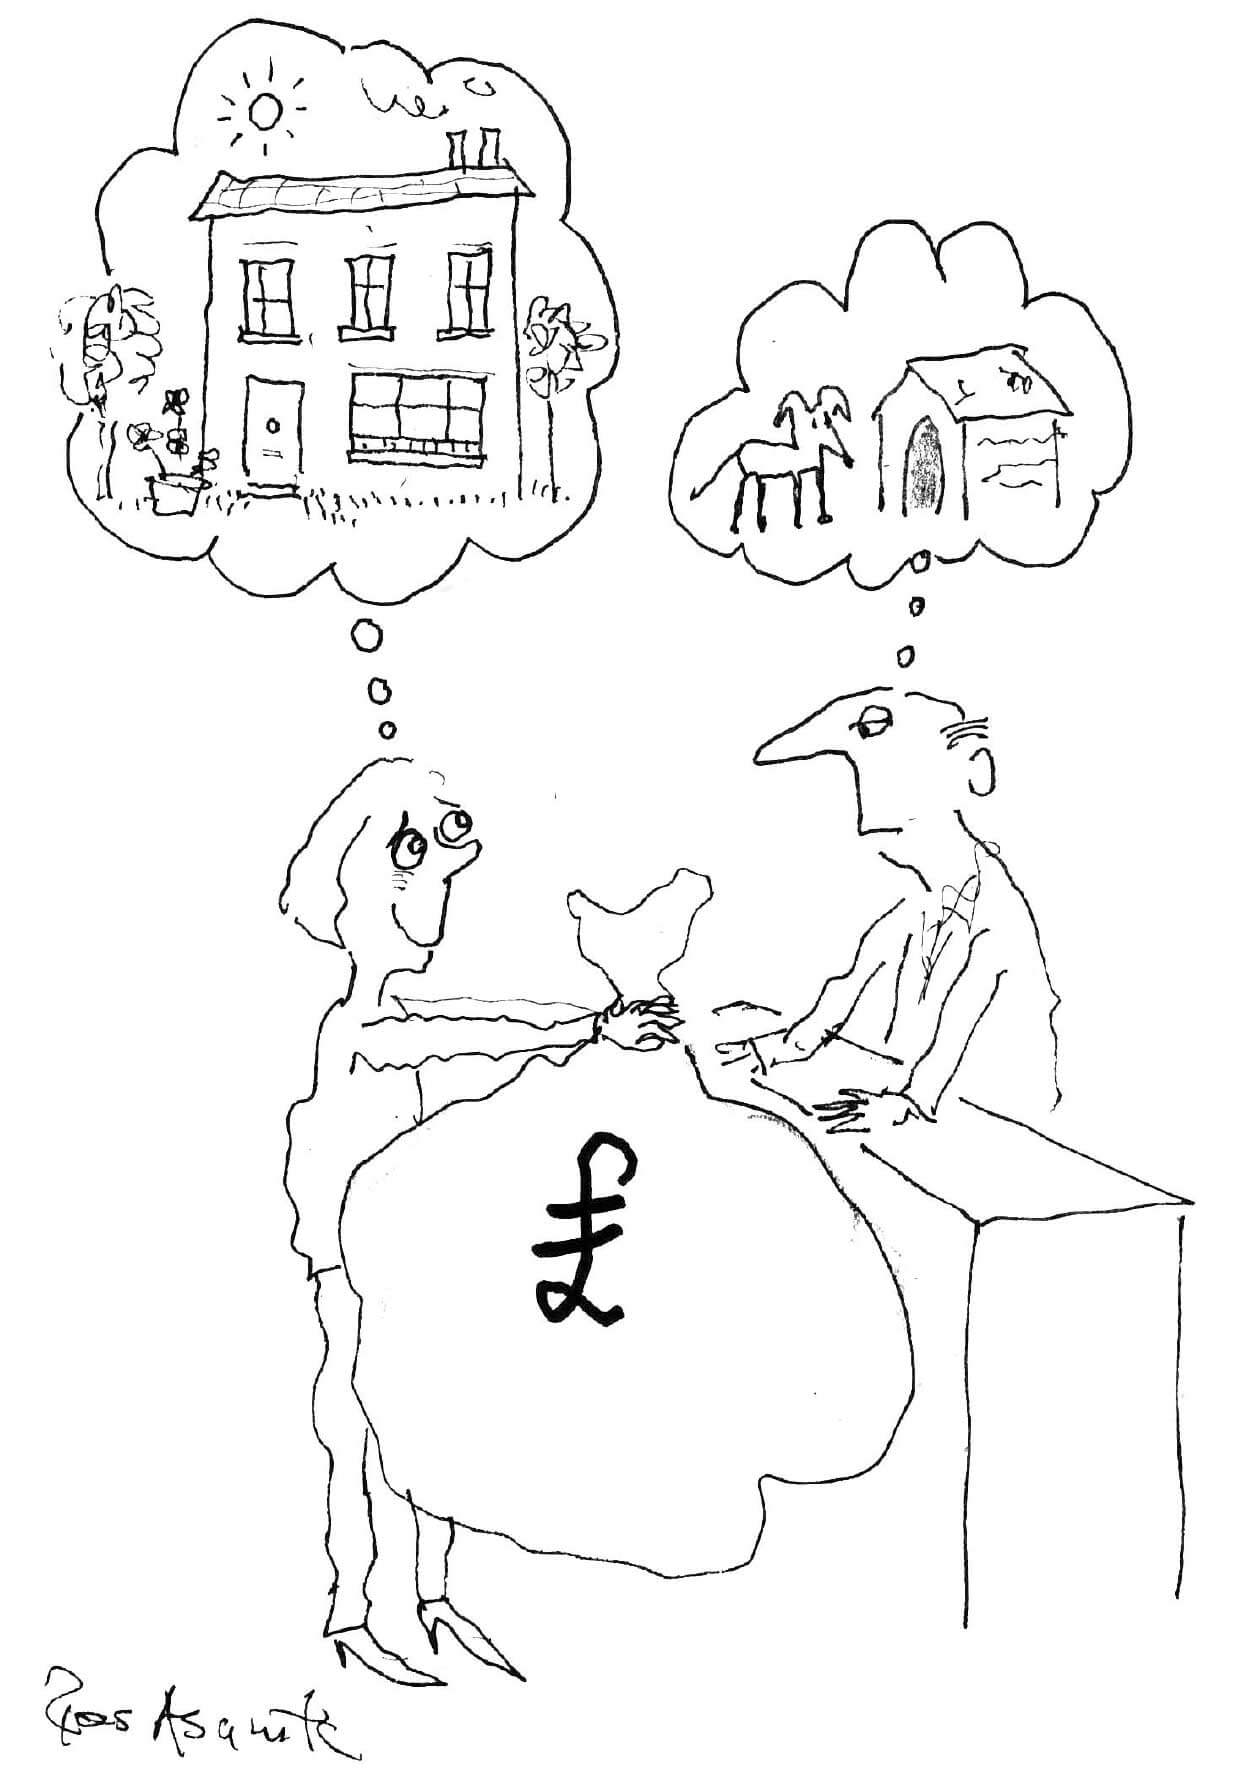 Ruth Whitehead Associates - mortgages cartoon